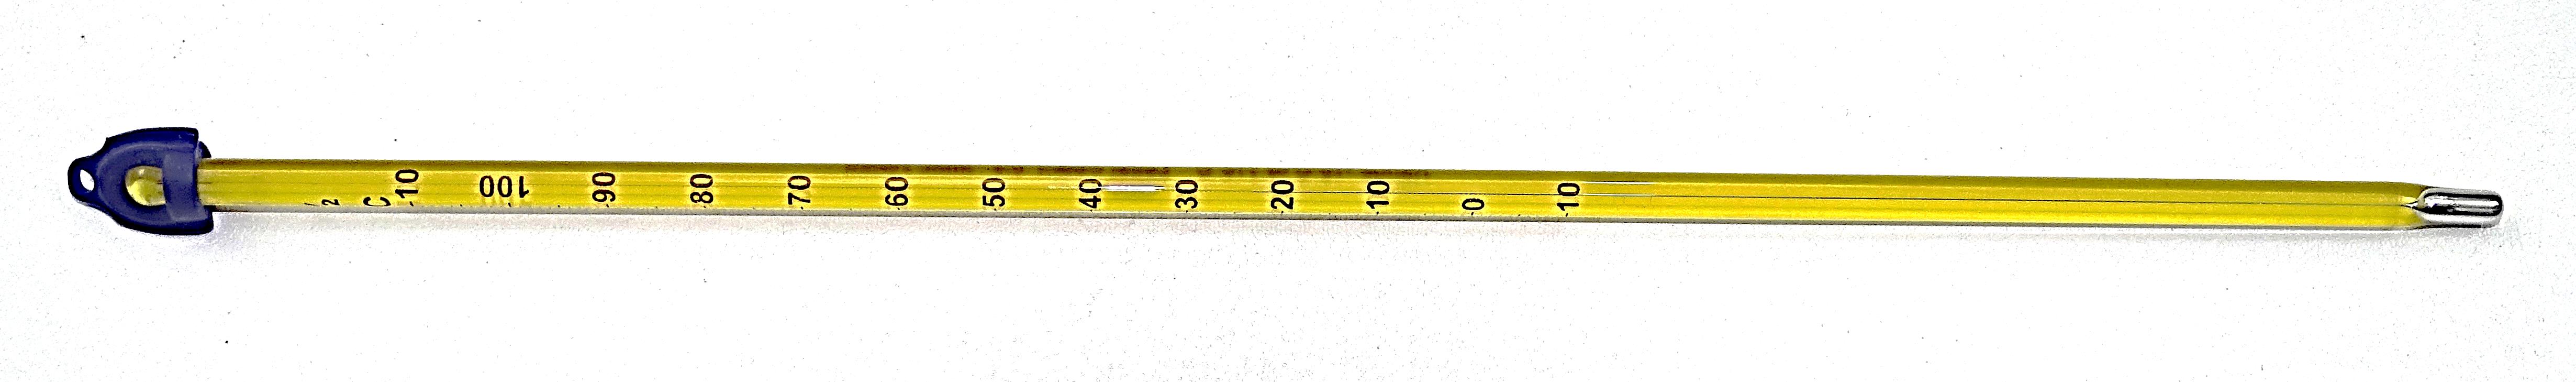 tl_files/2015/Articulos Lab/Termometro -10 a 110°C.jpg